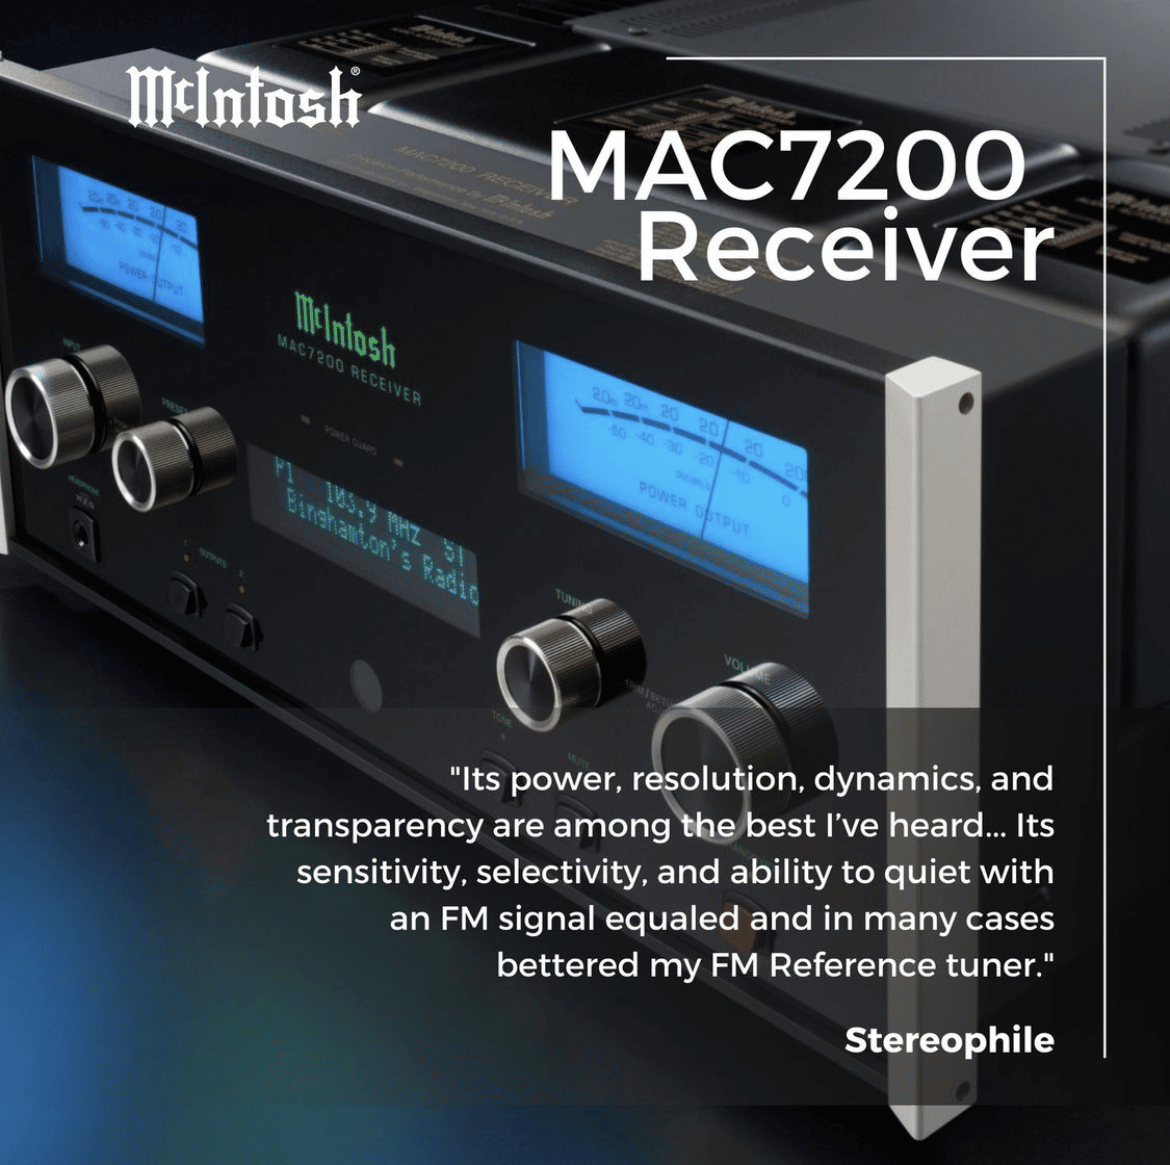 McIntosh MAC7200 stereophile